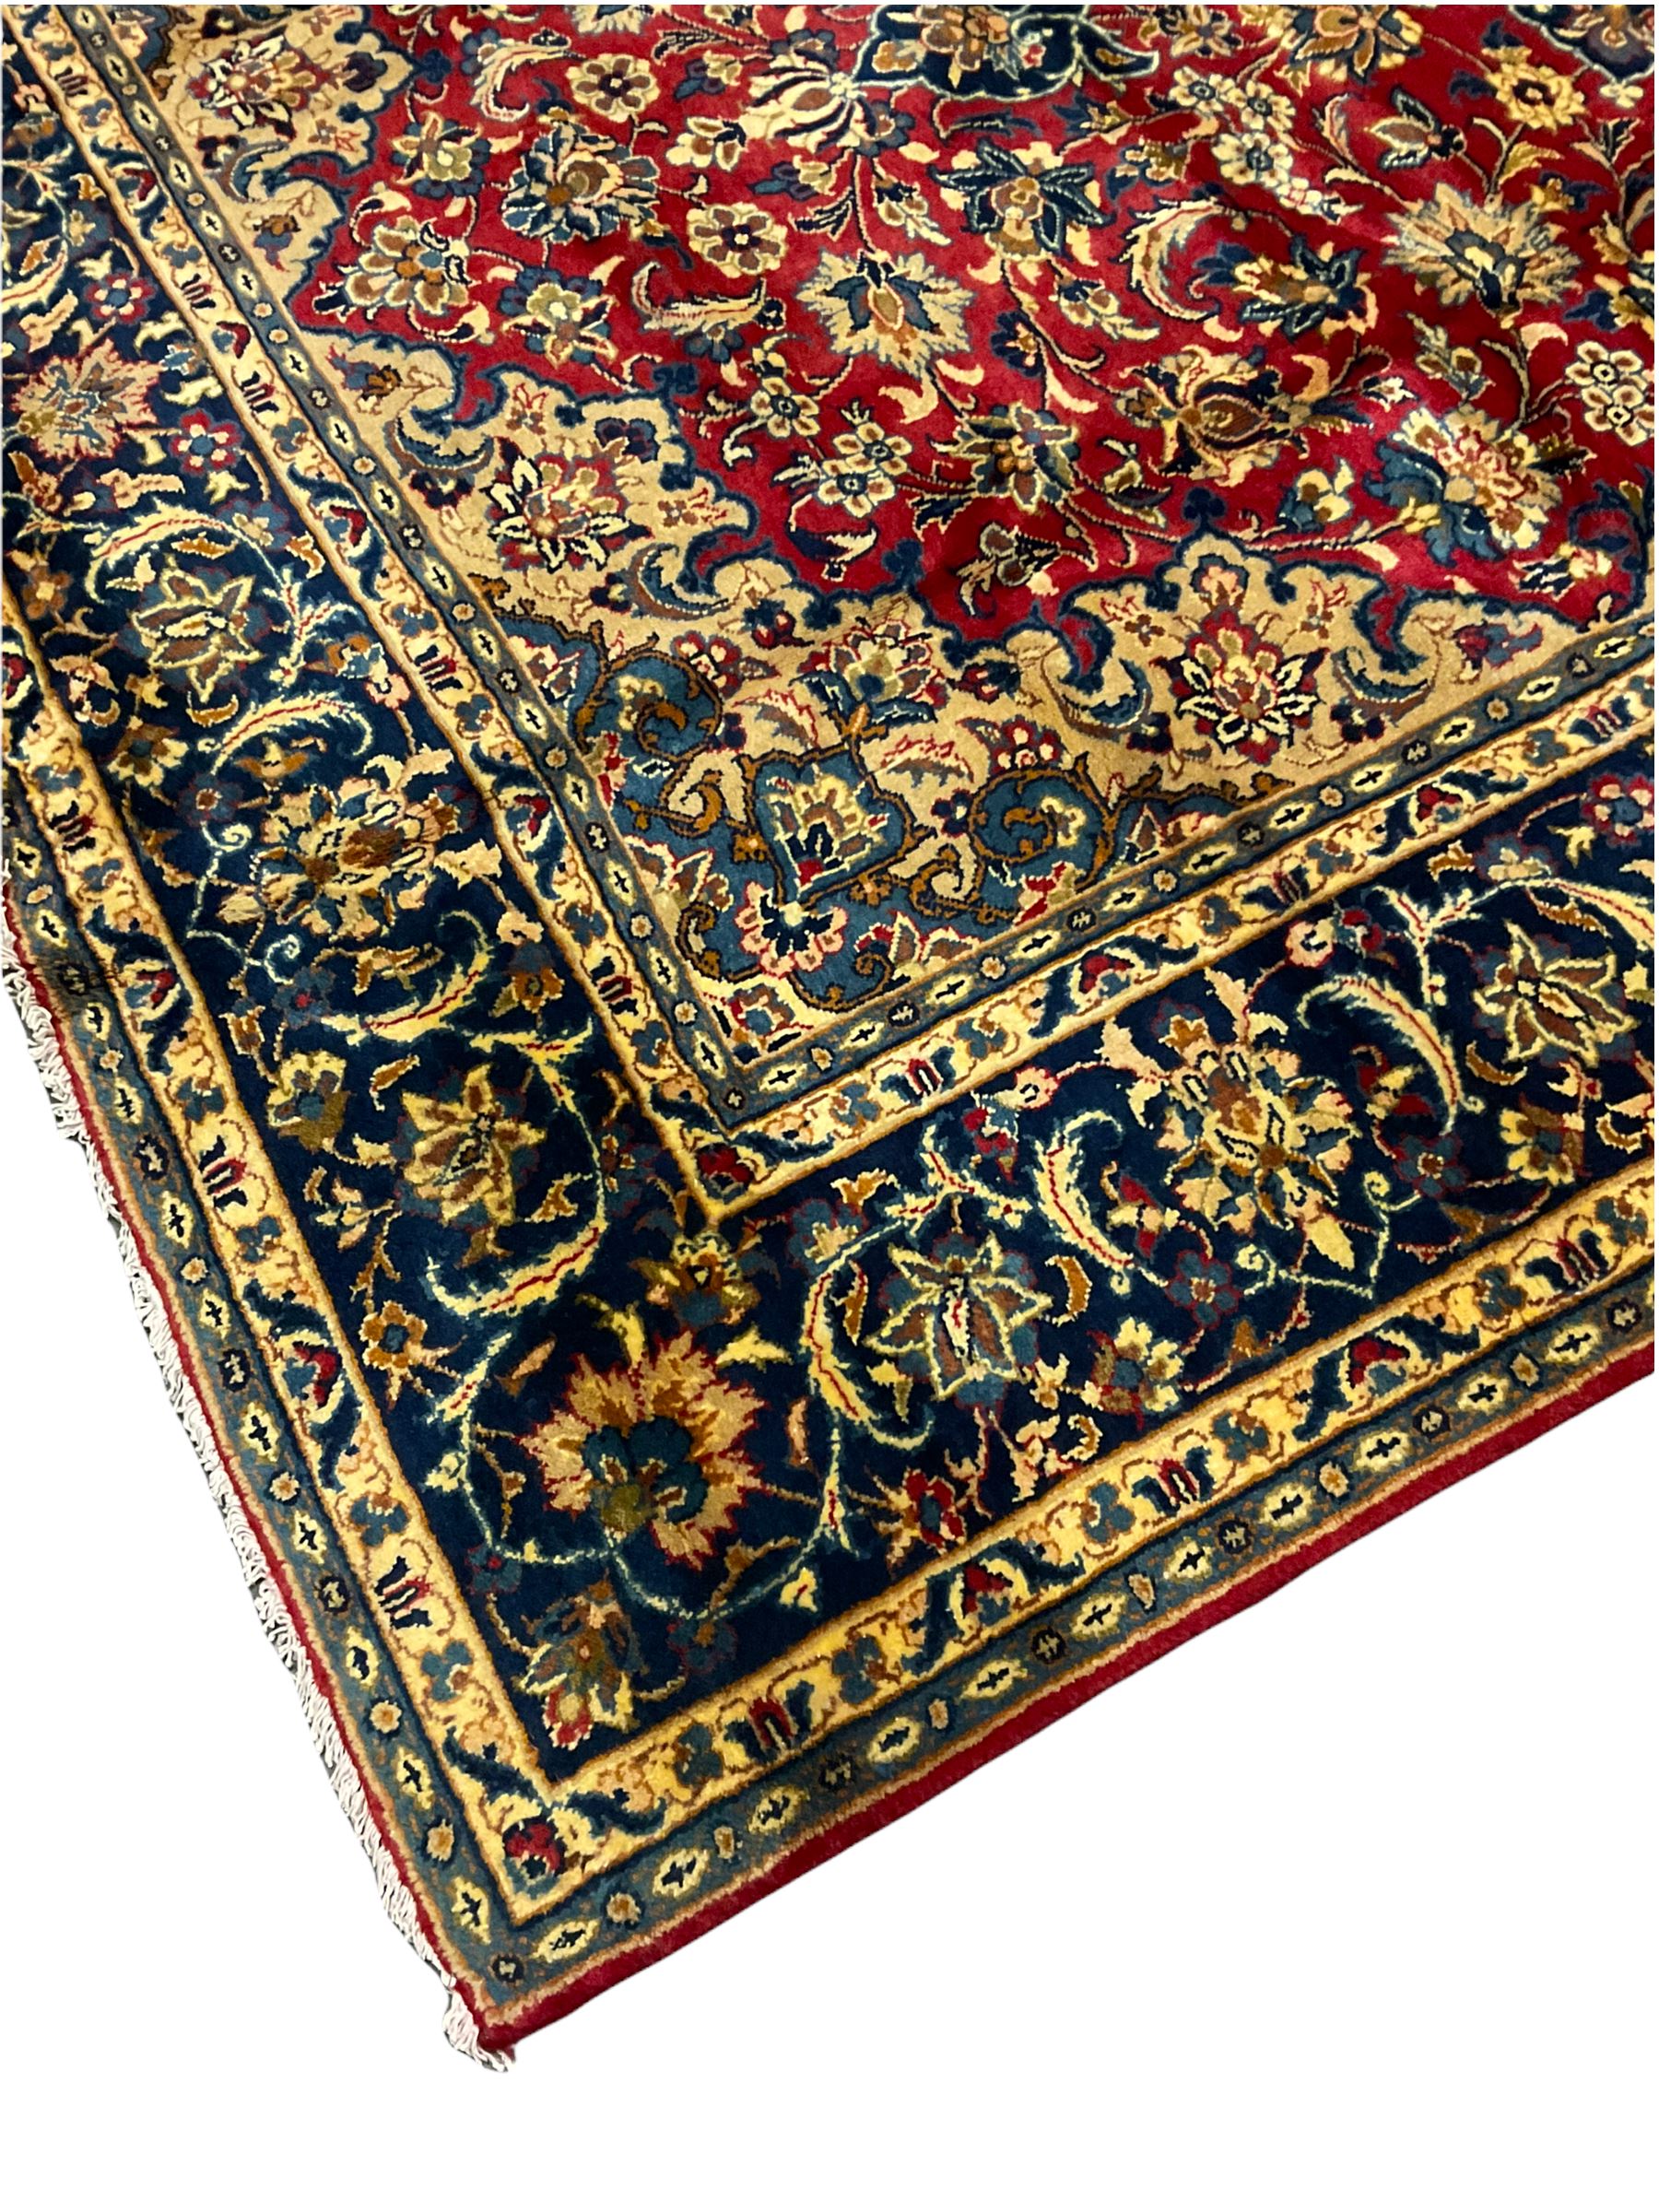 Persian Najafabad red ground carpet - Image 3 of 6